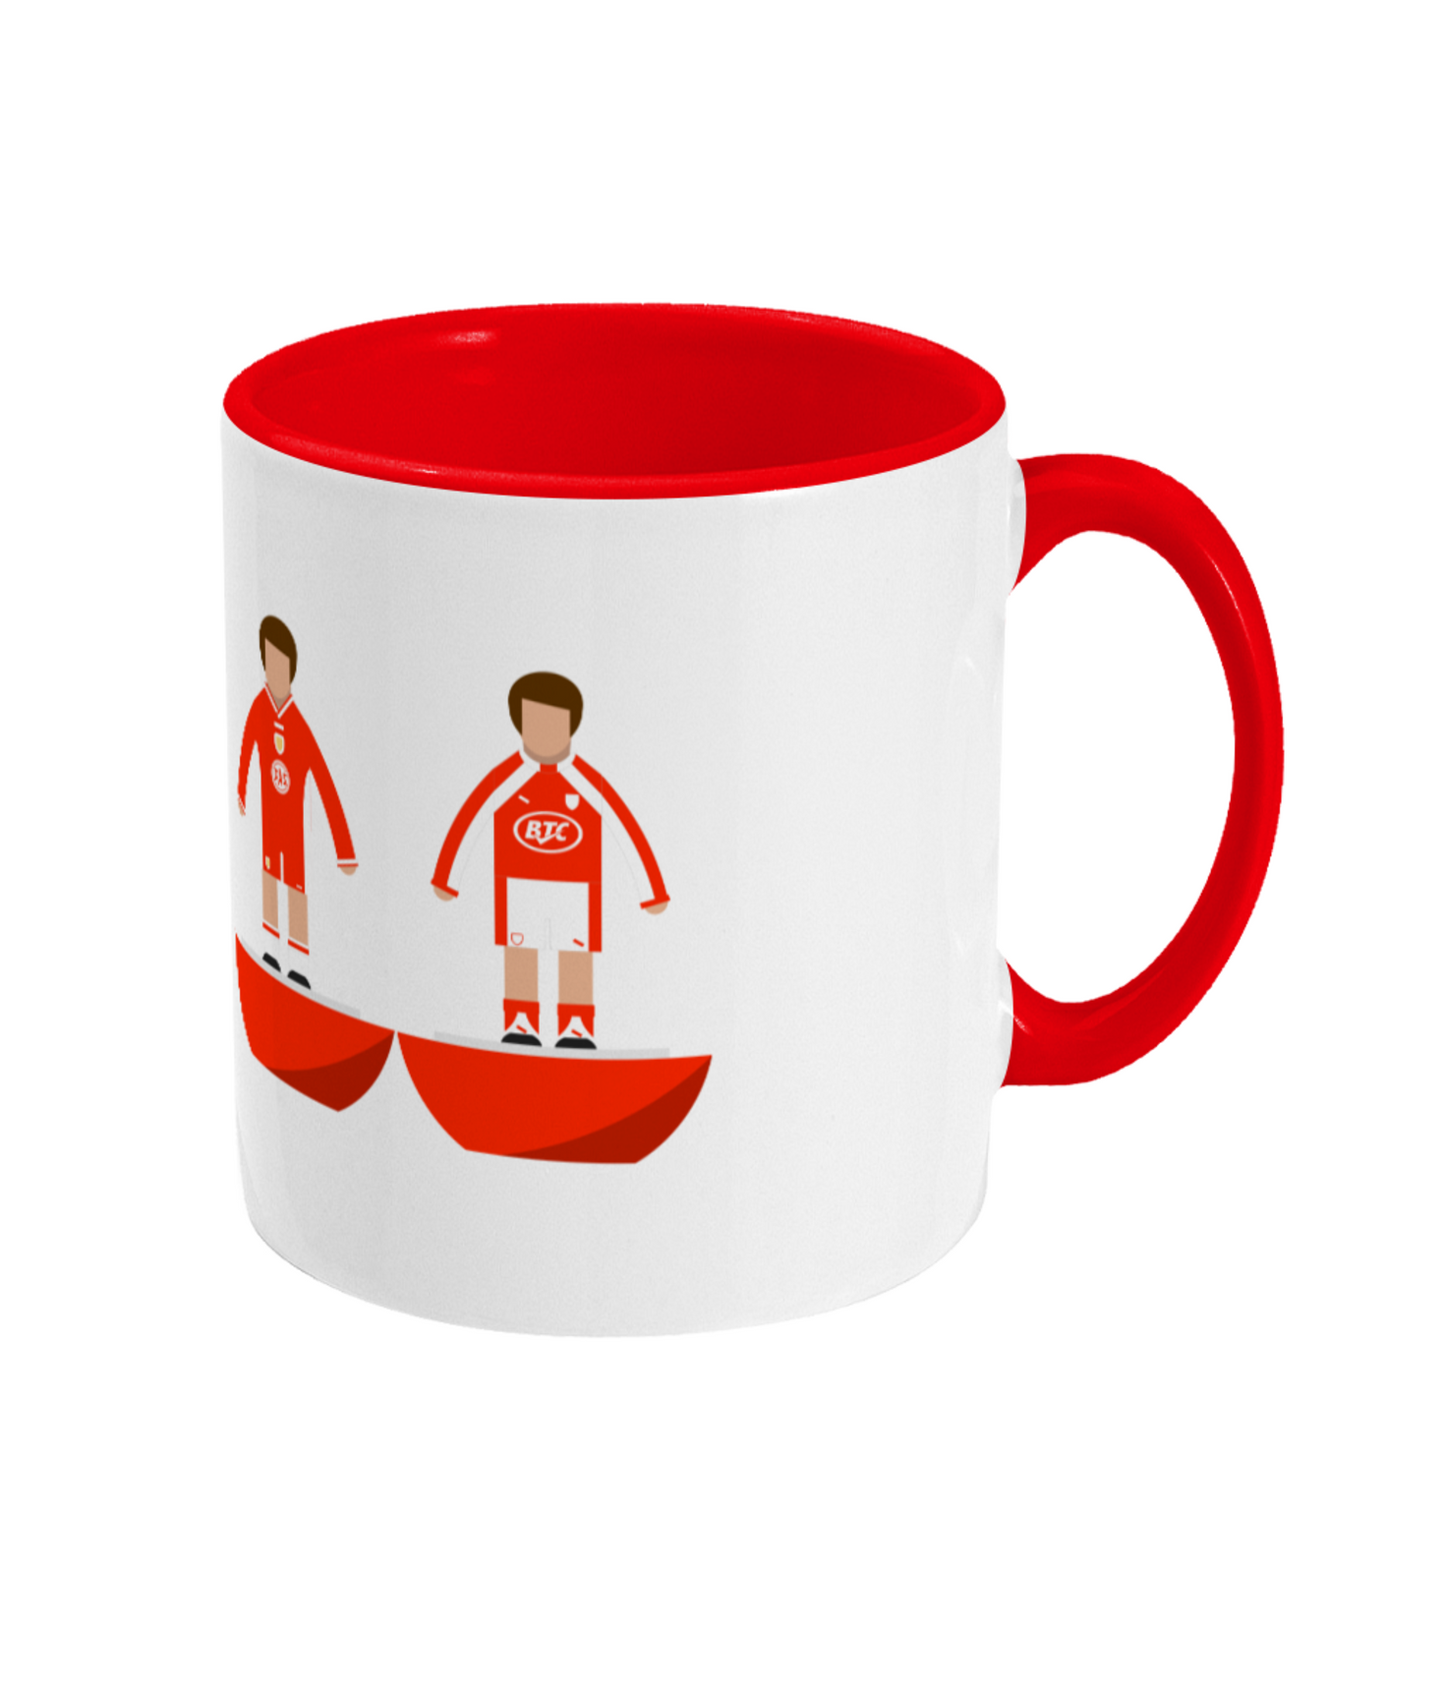 Football Kits 'Bristol City combined' Mug